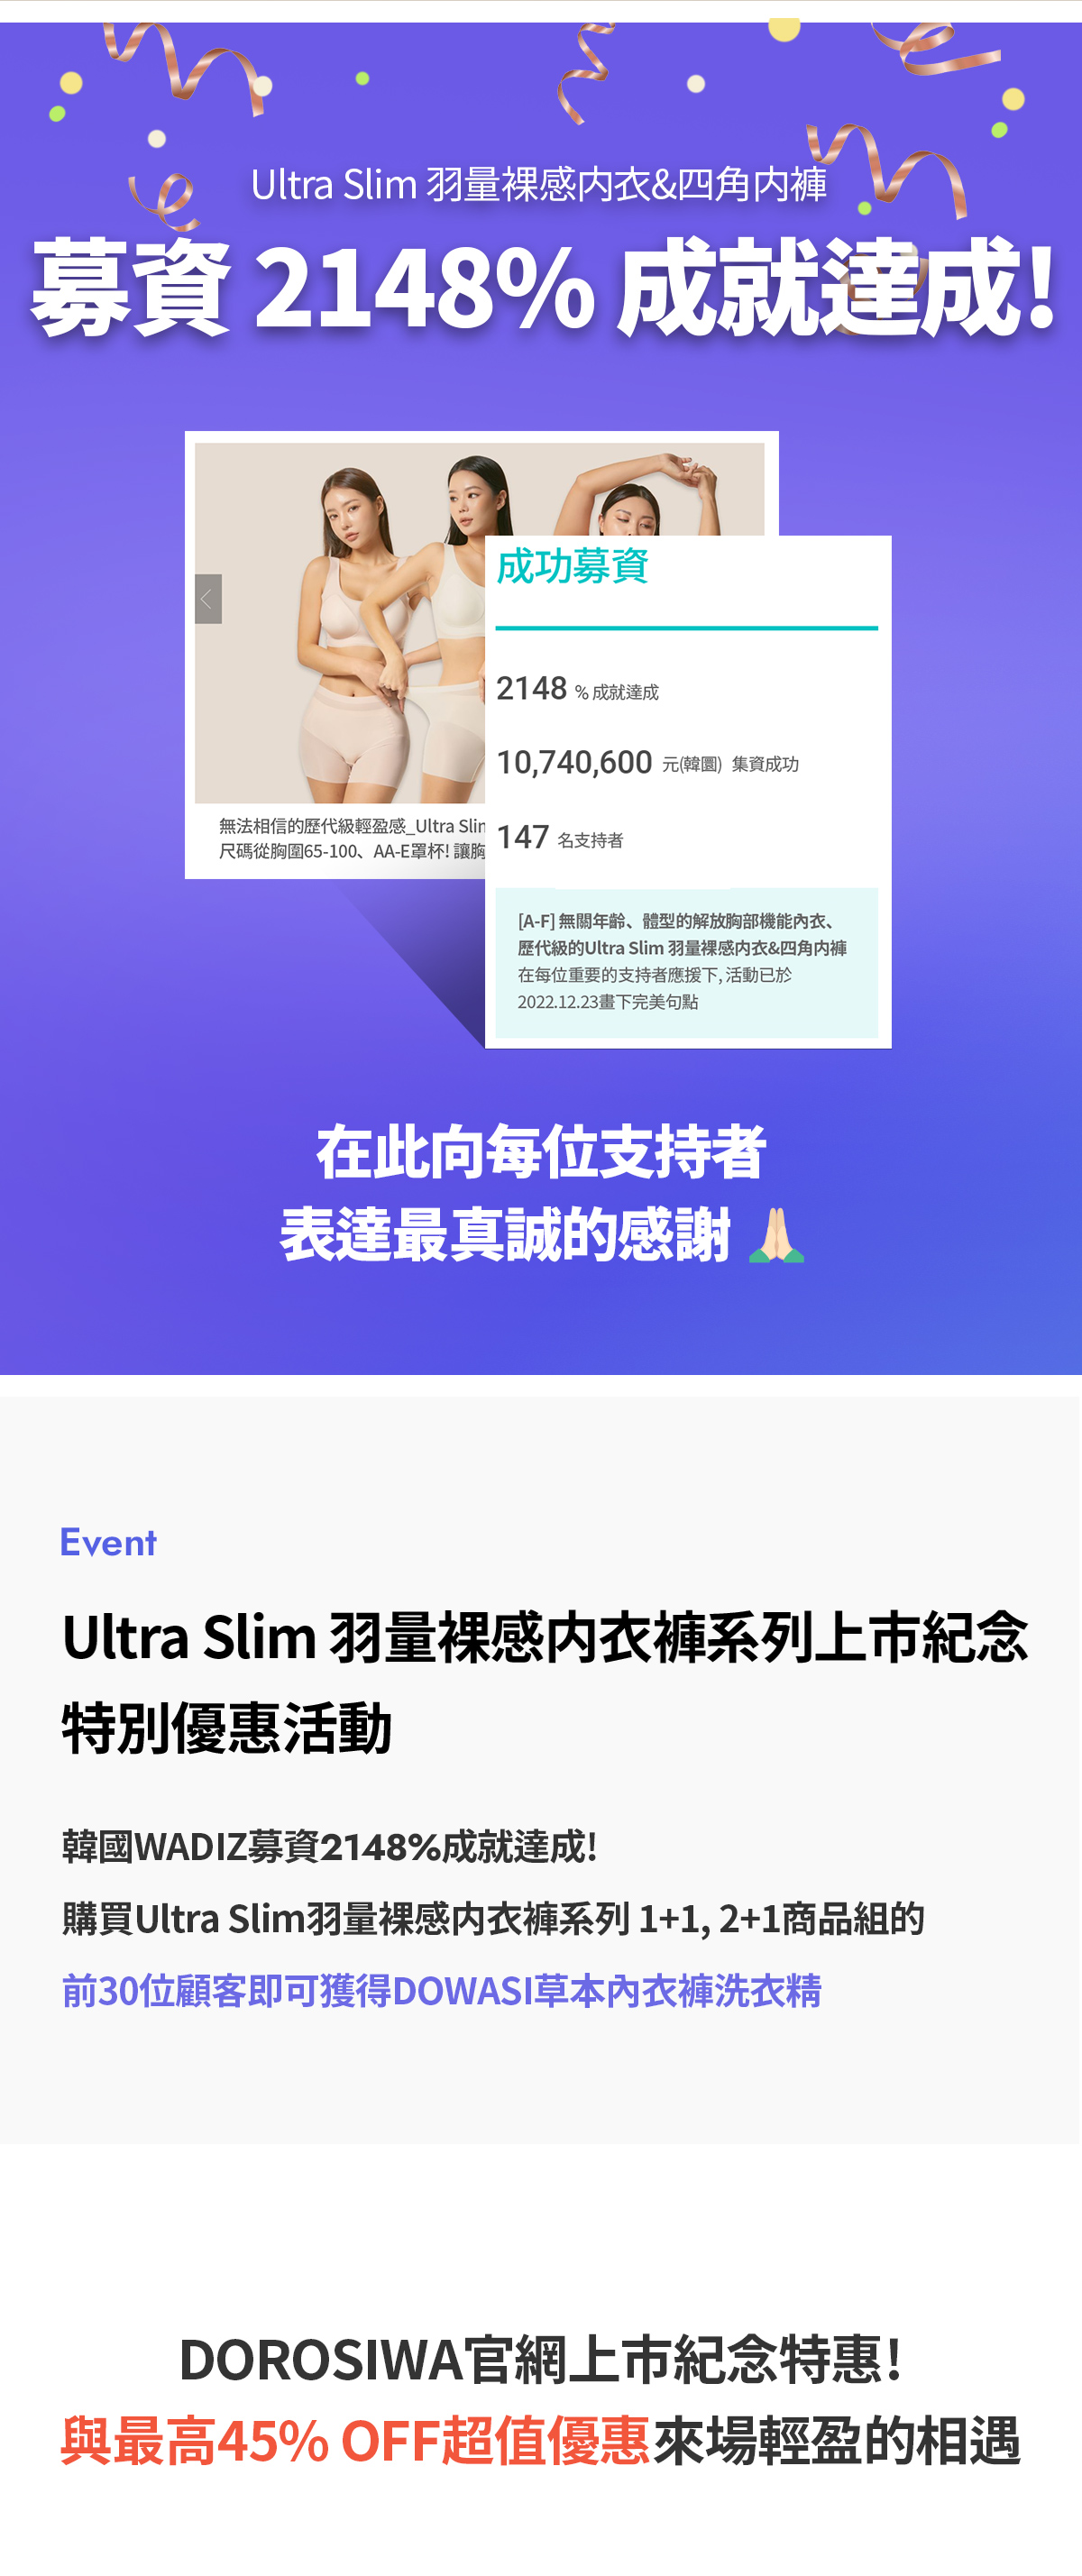 Ultra Slim 羽量裸感内衣&四角内褲 募資 2148% 成就達成!